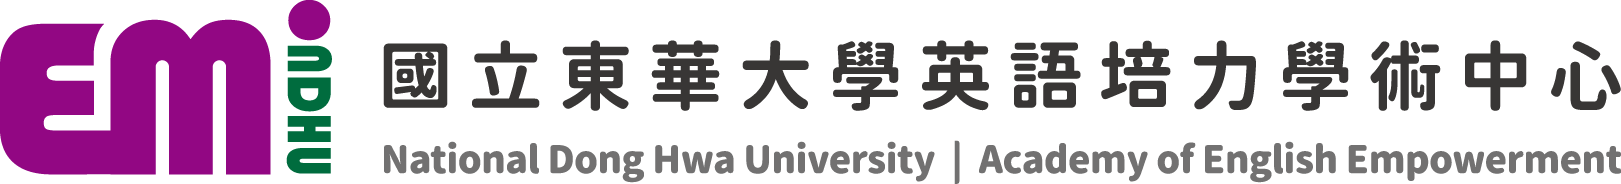 國立東華大學 英語培力學術中心 National Dong Hwa University | Academy of English Empowerment